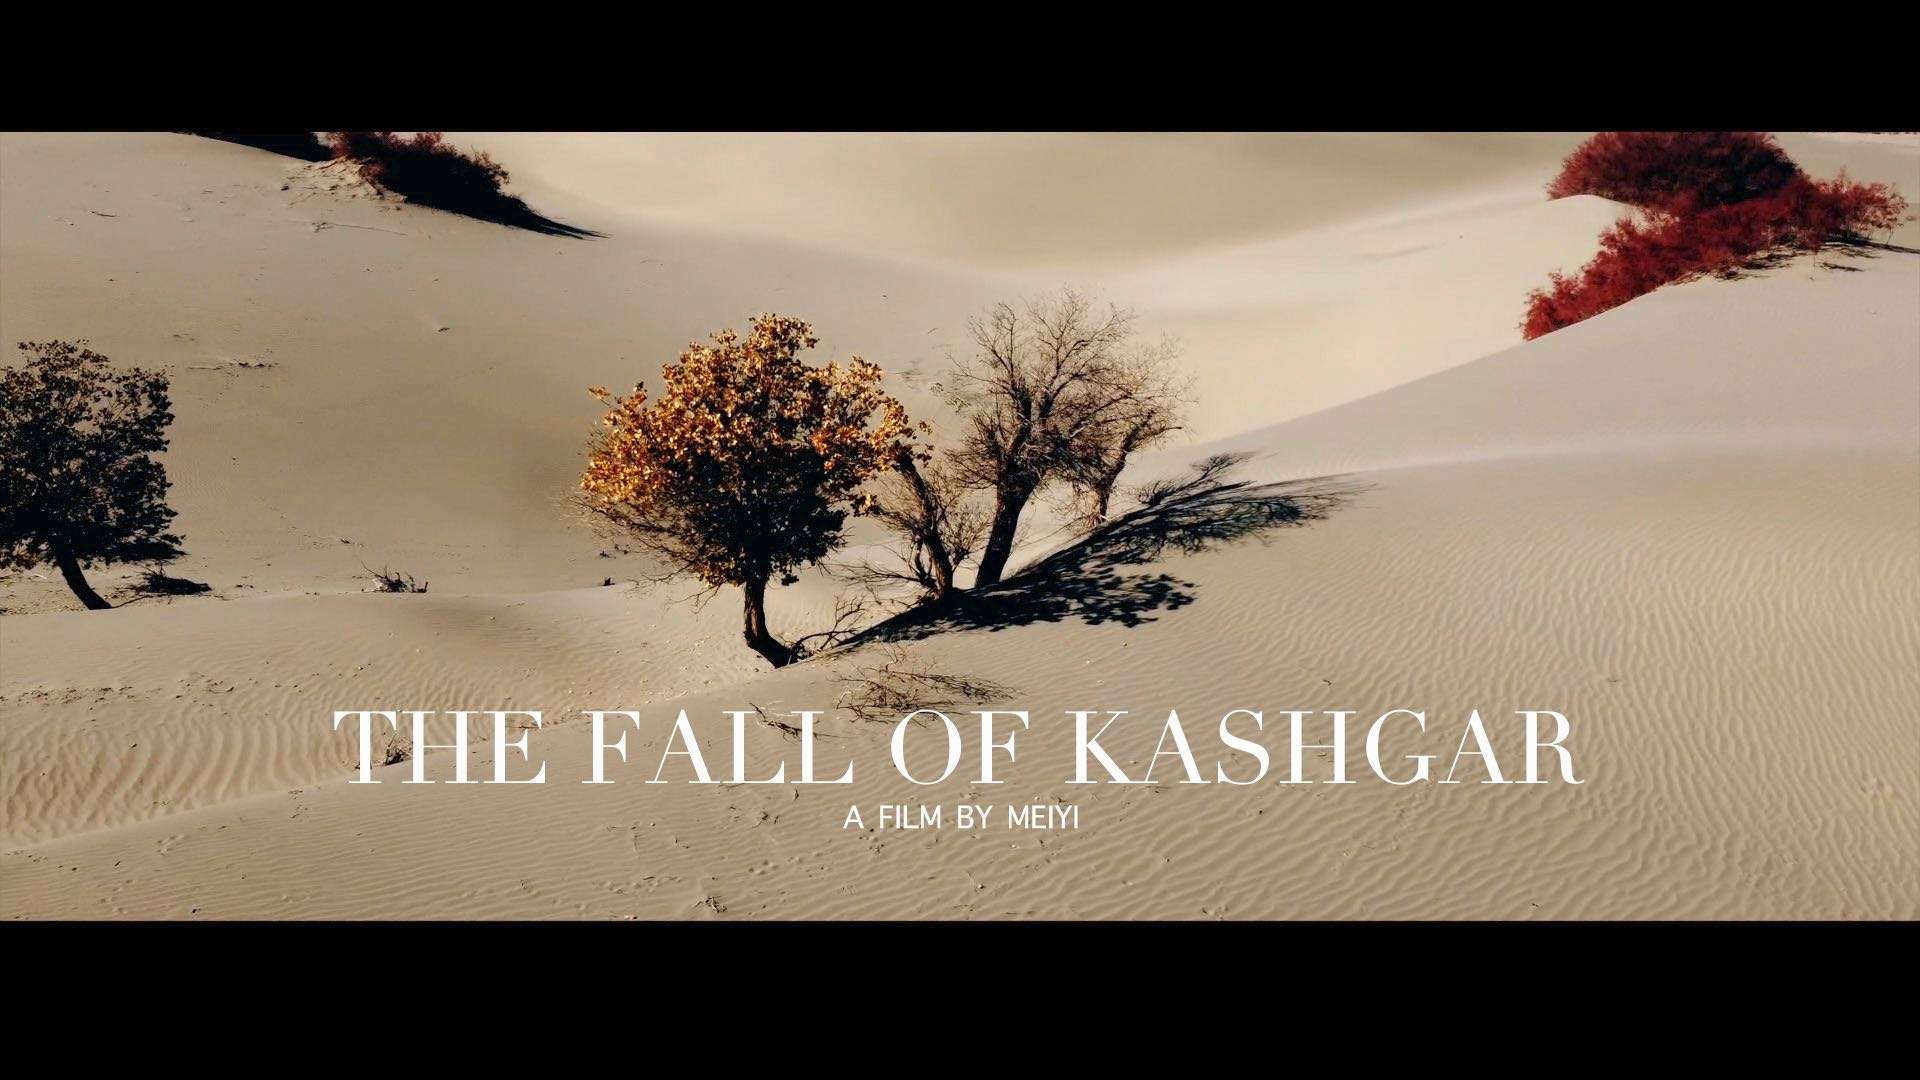 THE FALL OF KASHGAR